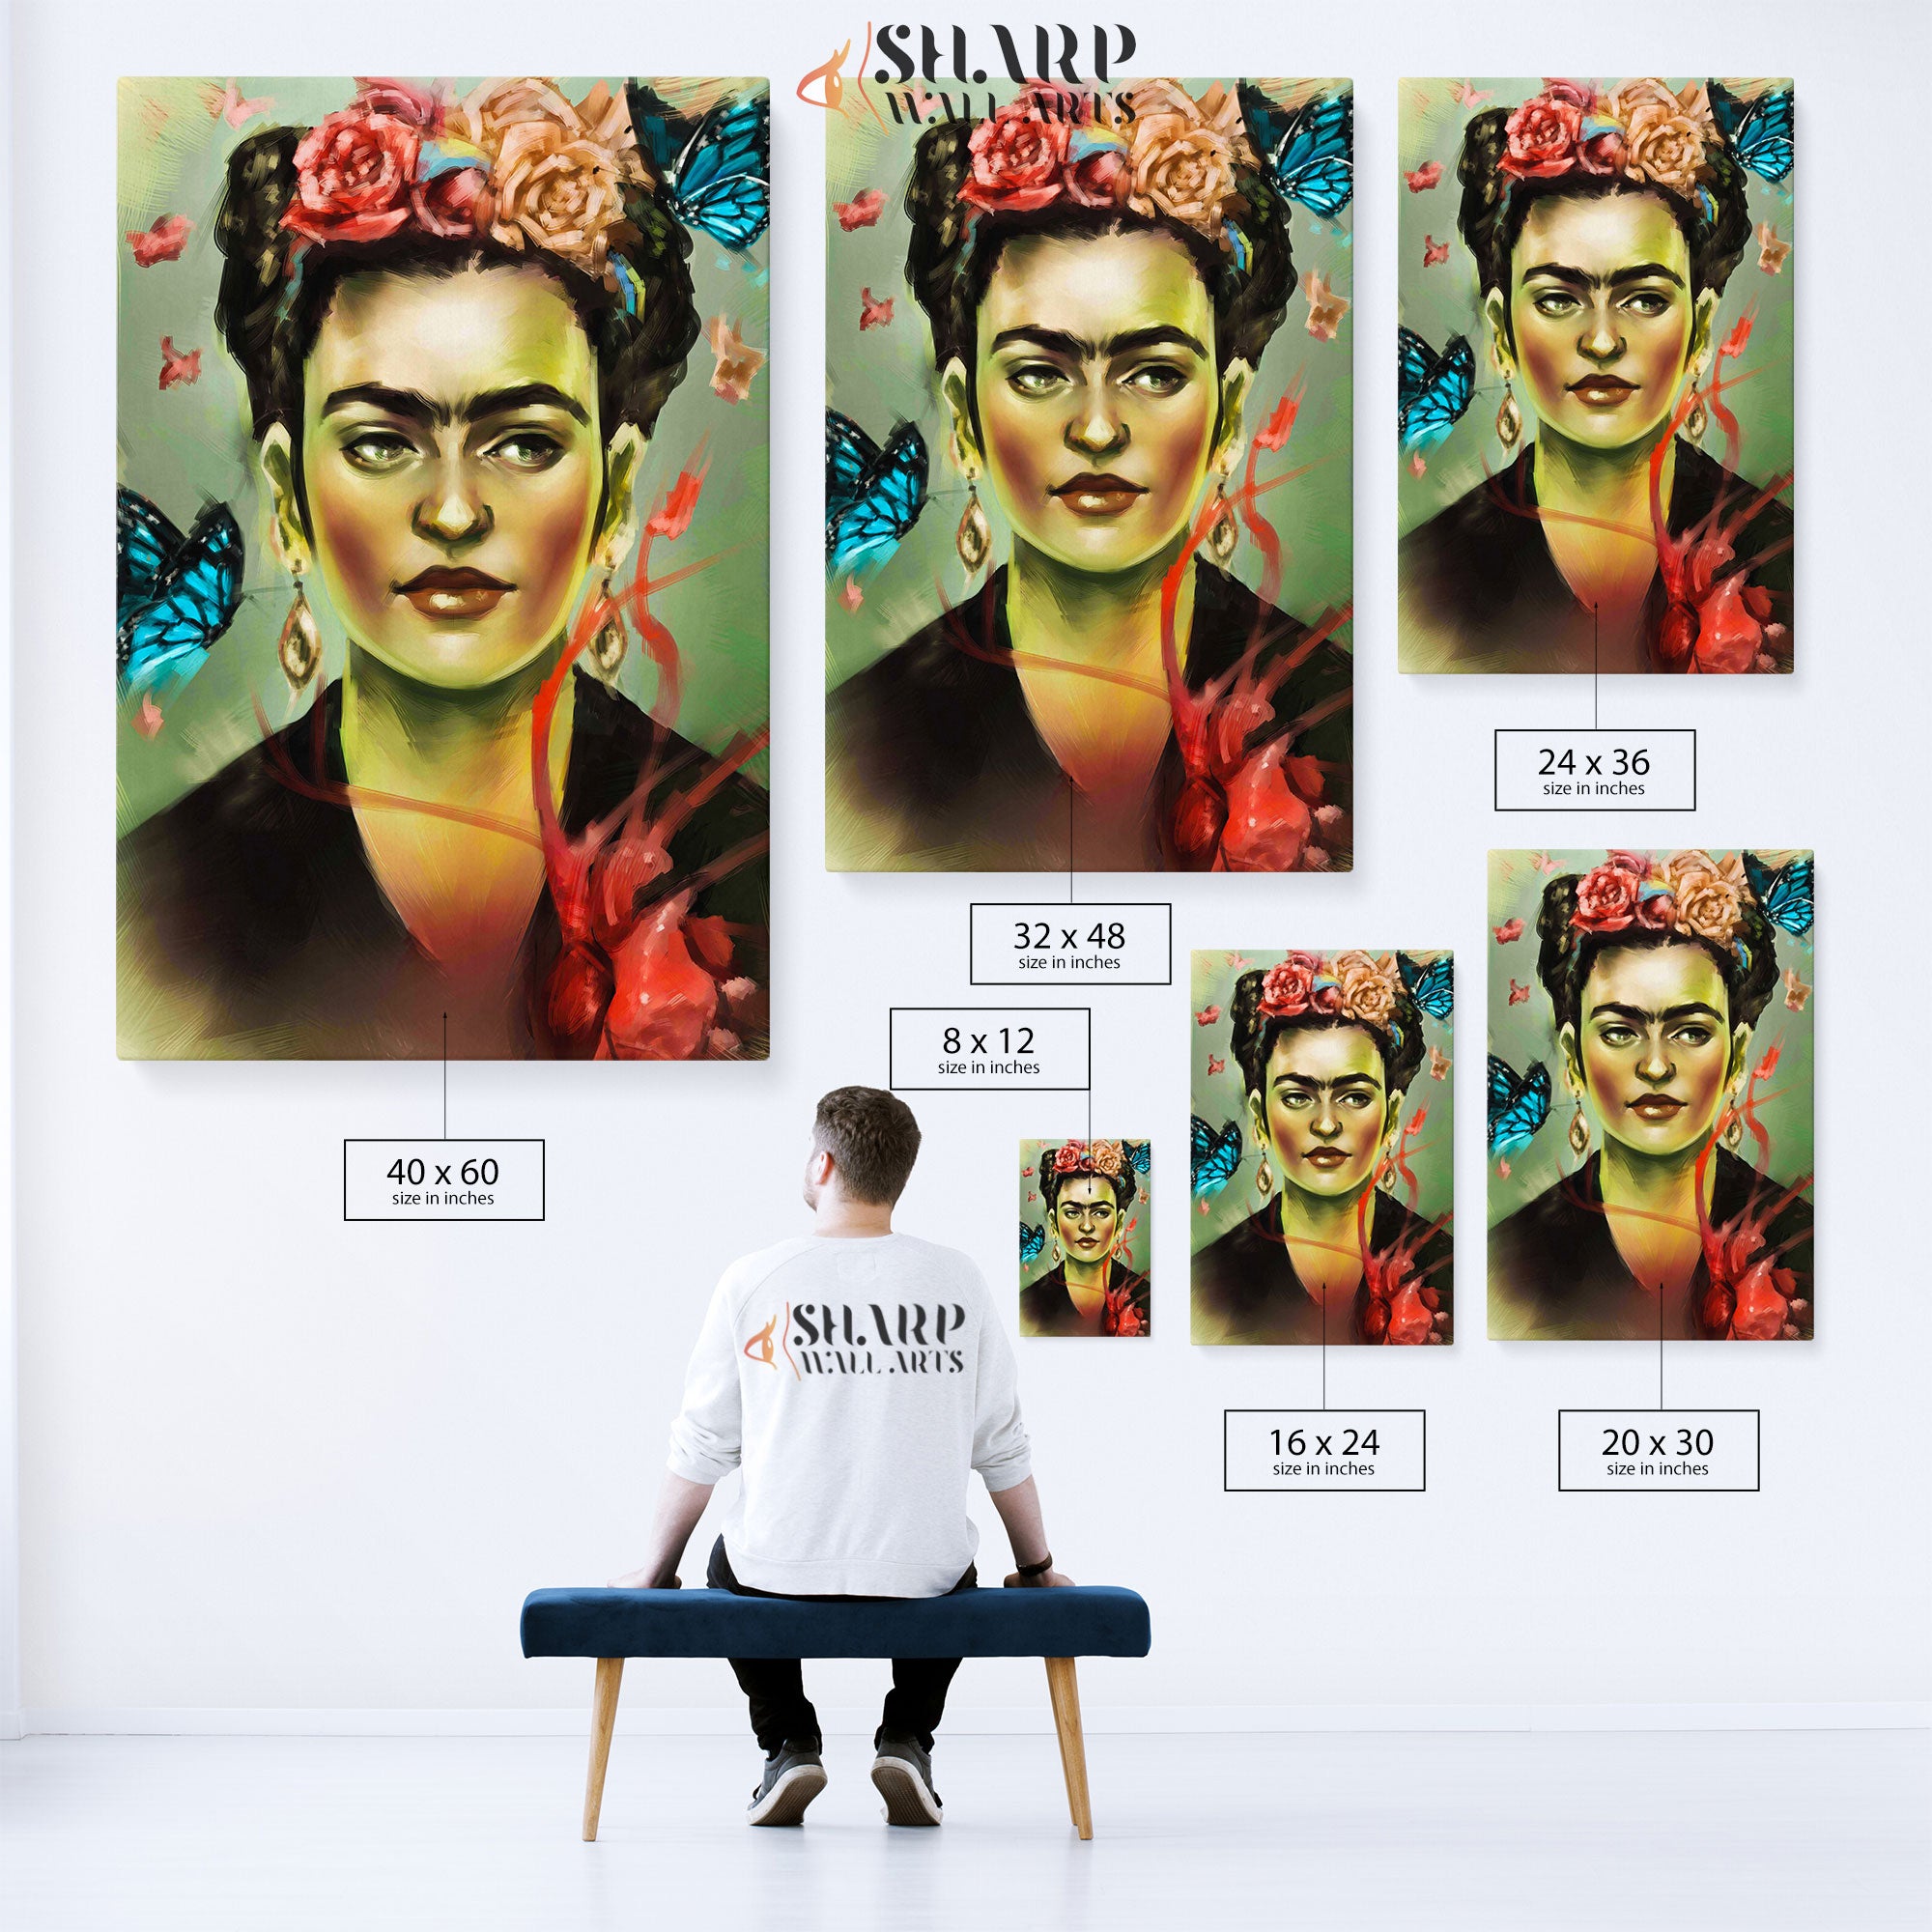 Frida Kahlo Oil Painting Style Canvas Wall Art